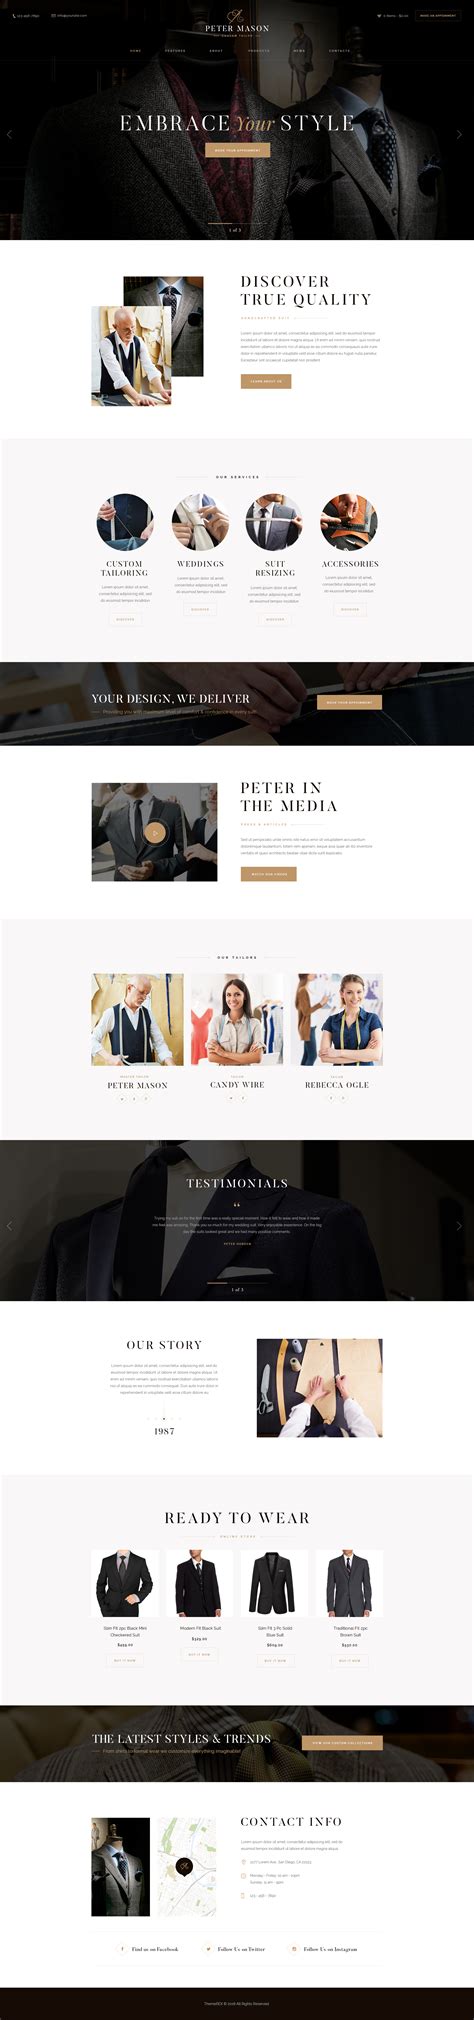 peter mason v1 2 1 custom tailoring and clothing store